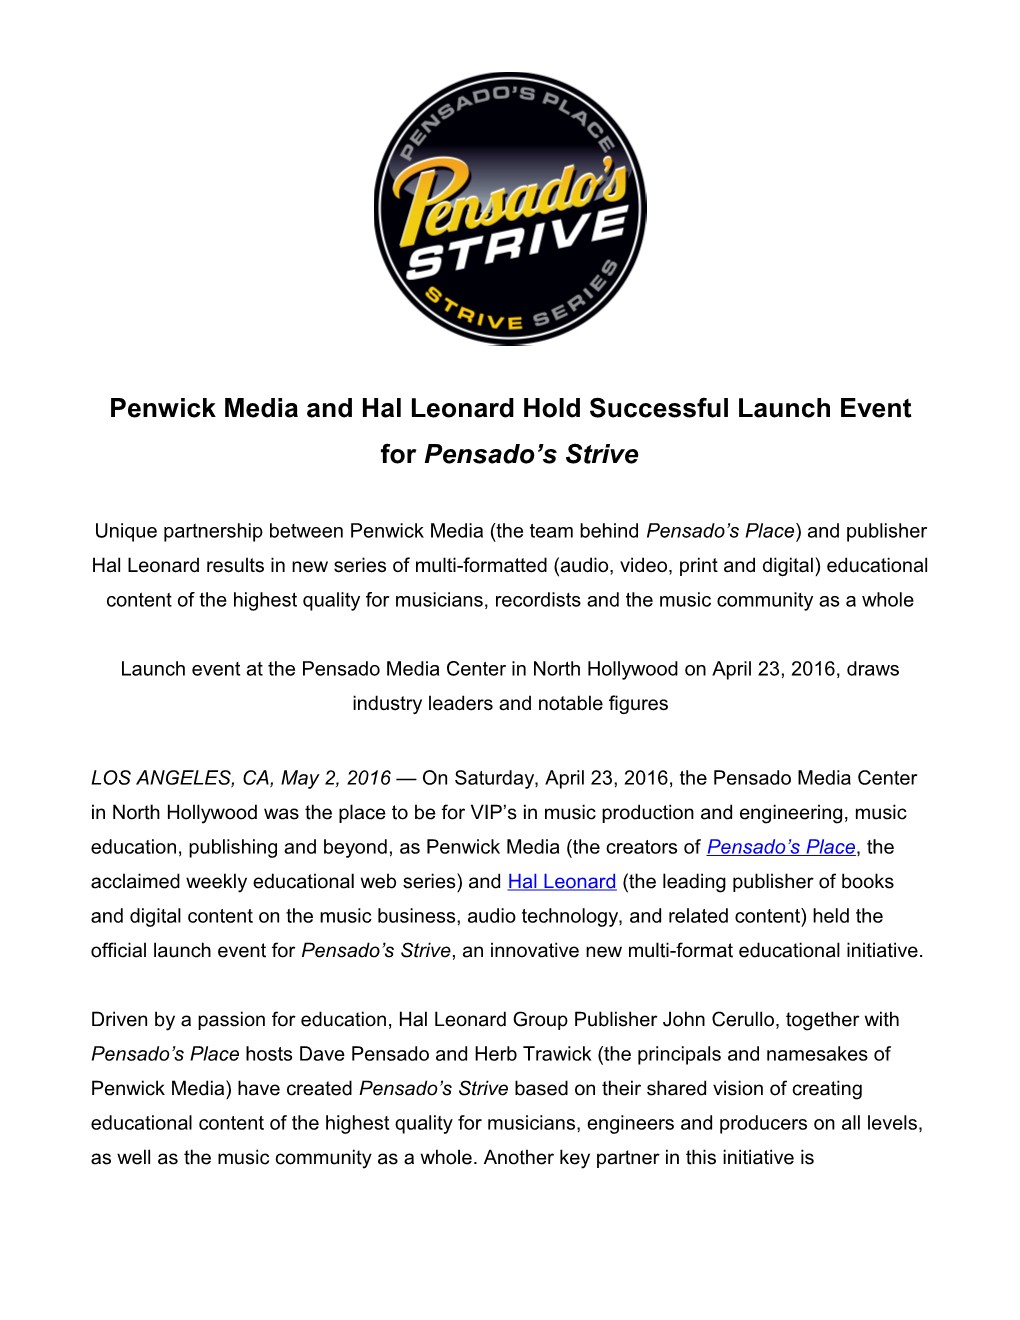 Penwick Media and Hal Leonard Hold Successful Launch Event Forpensado S Strive